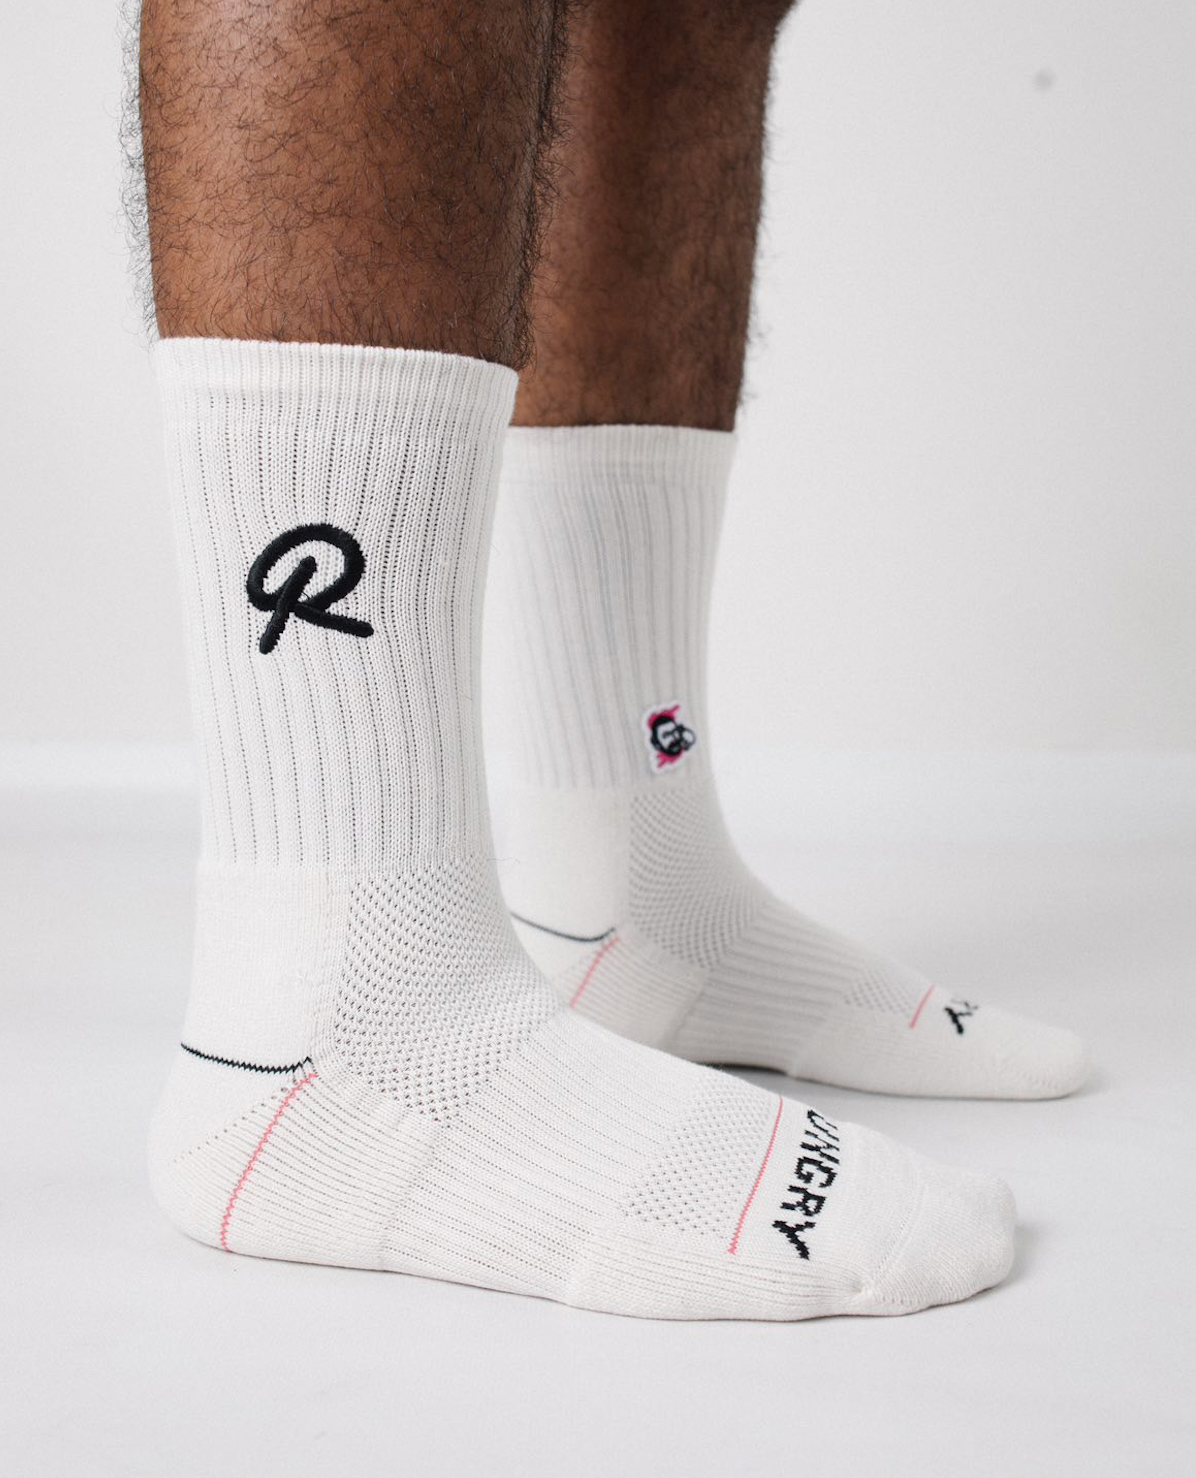 R1 basketball socks